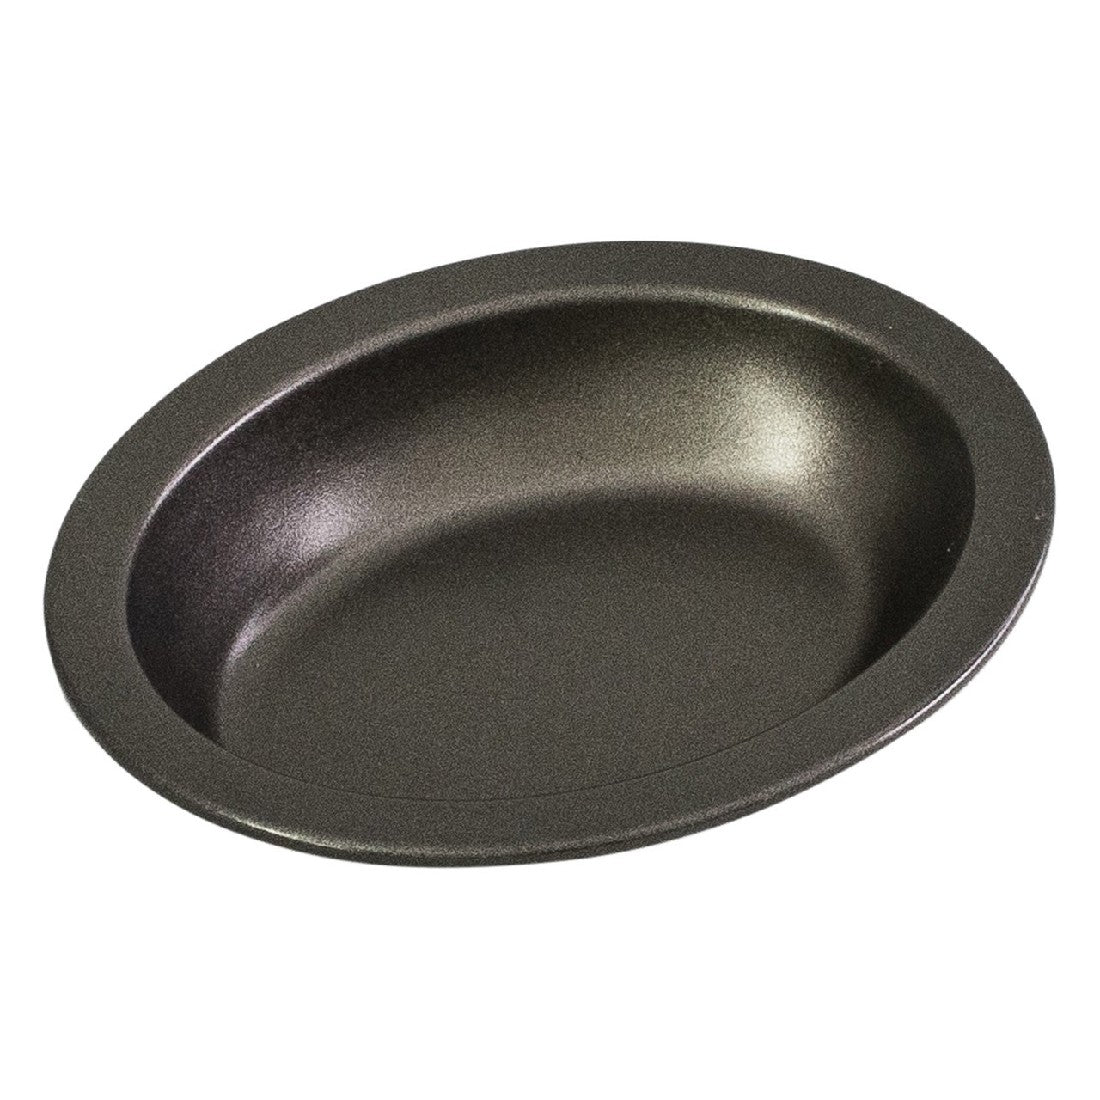 Bakemaster Individual Oval Pie Dish 13.5x10x3cm